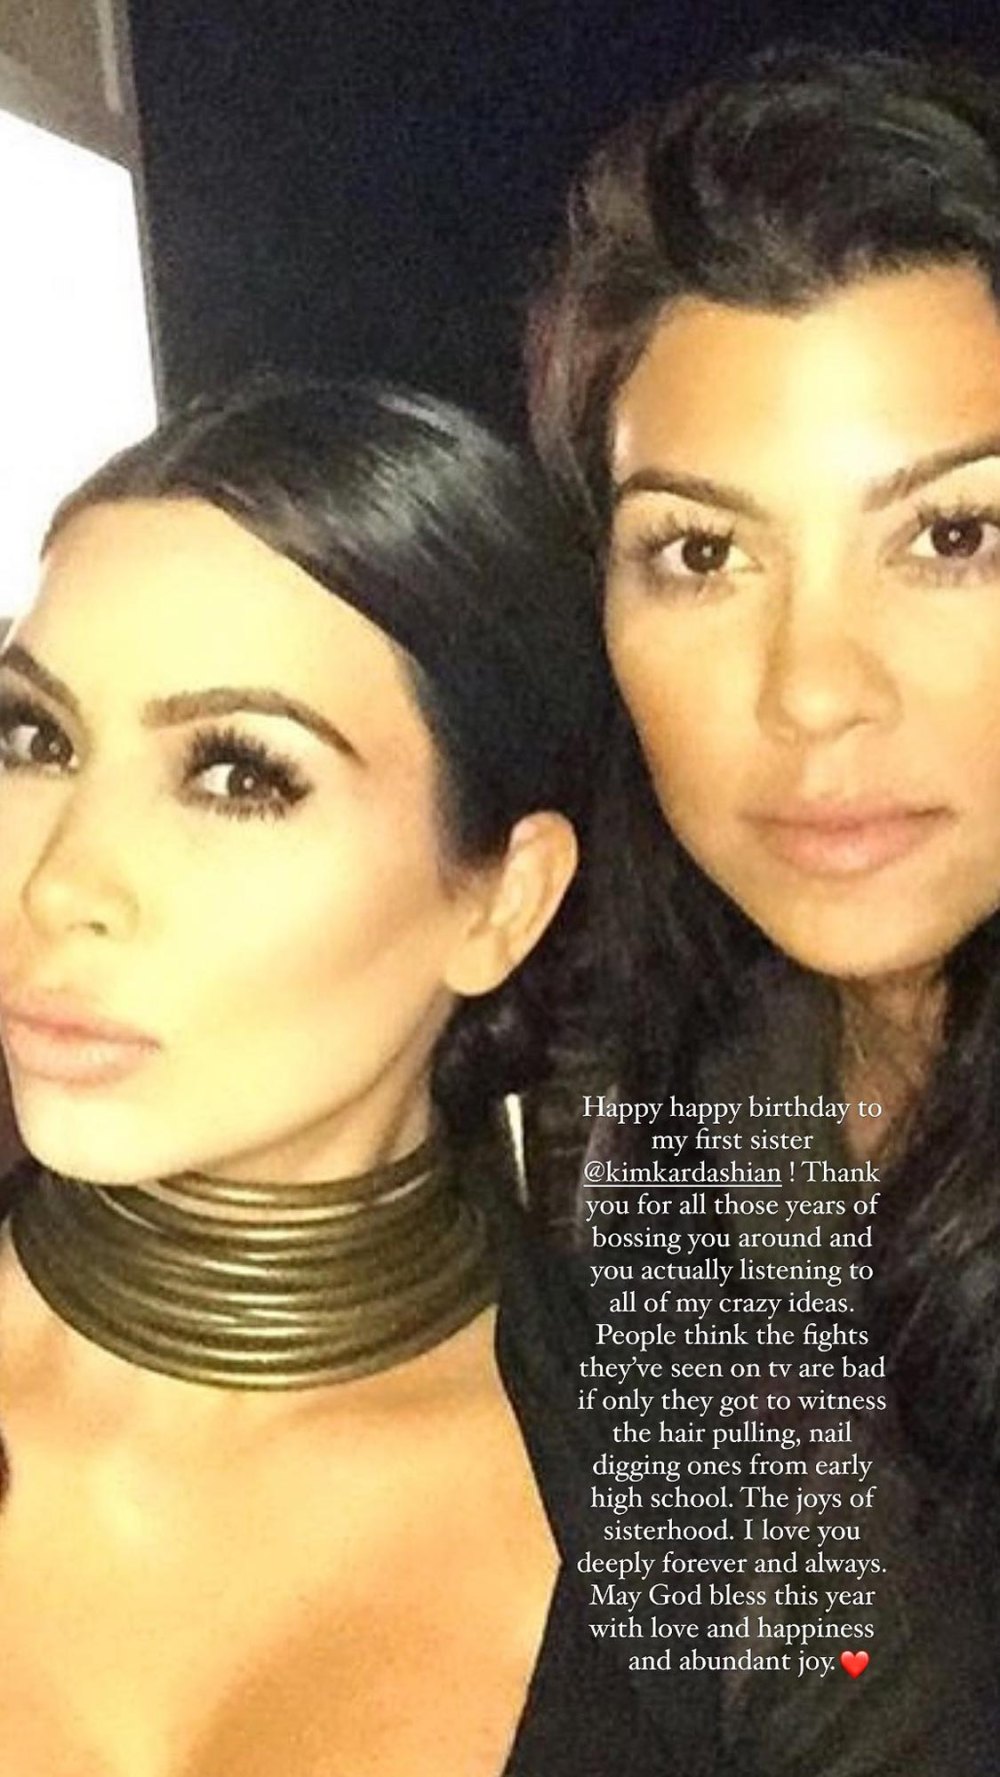 Kourtney Kardashian Says Fights With Sister Kim Were Worse in Early High School Despite D&G Feud 274